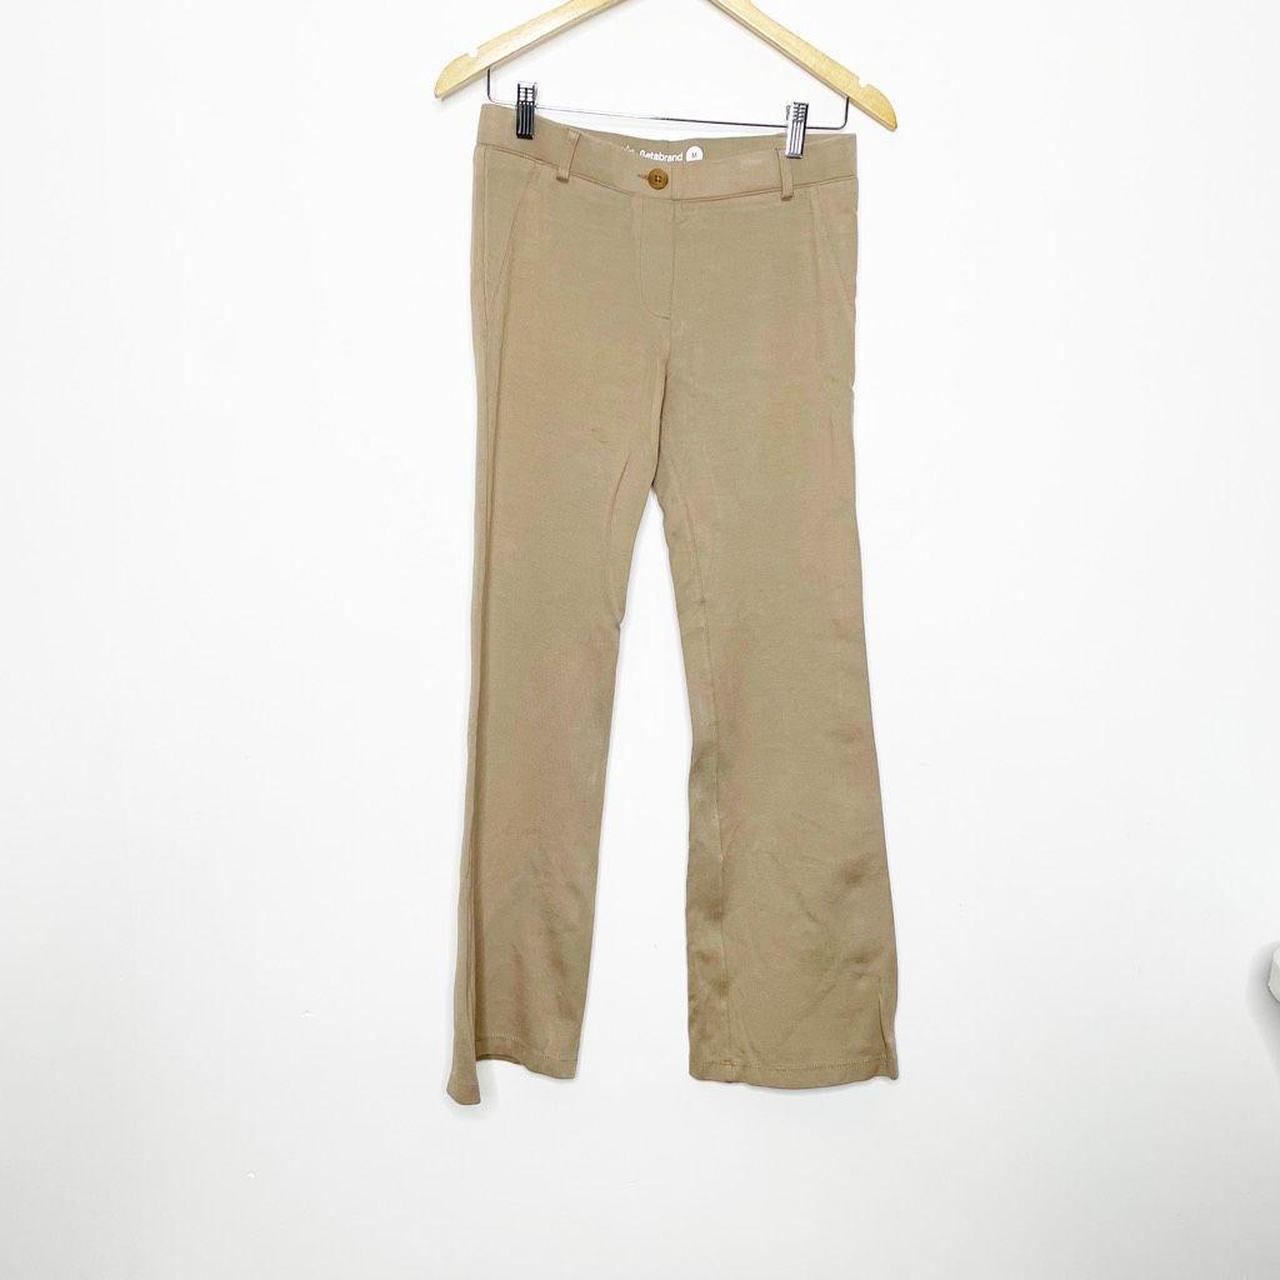 Betabrand Classic Boot-Cut Dress Pant Yoga (Khaki - Depop